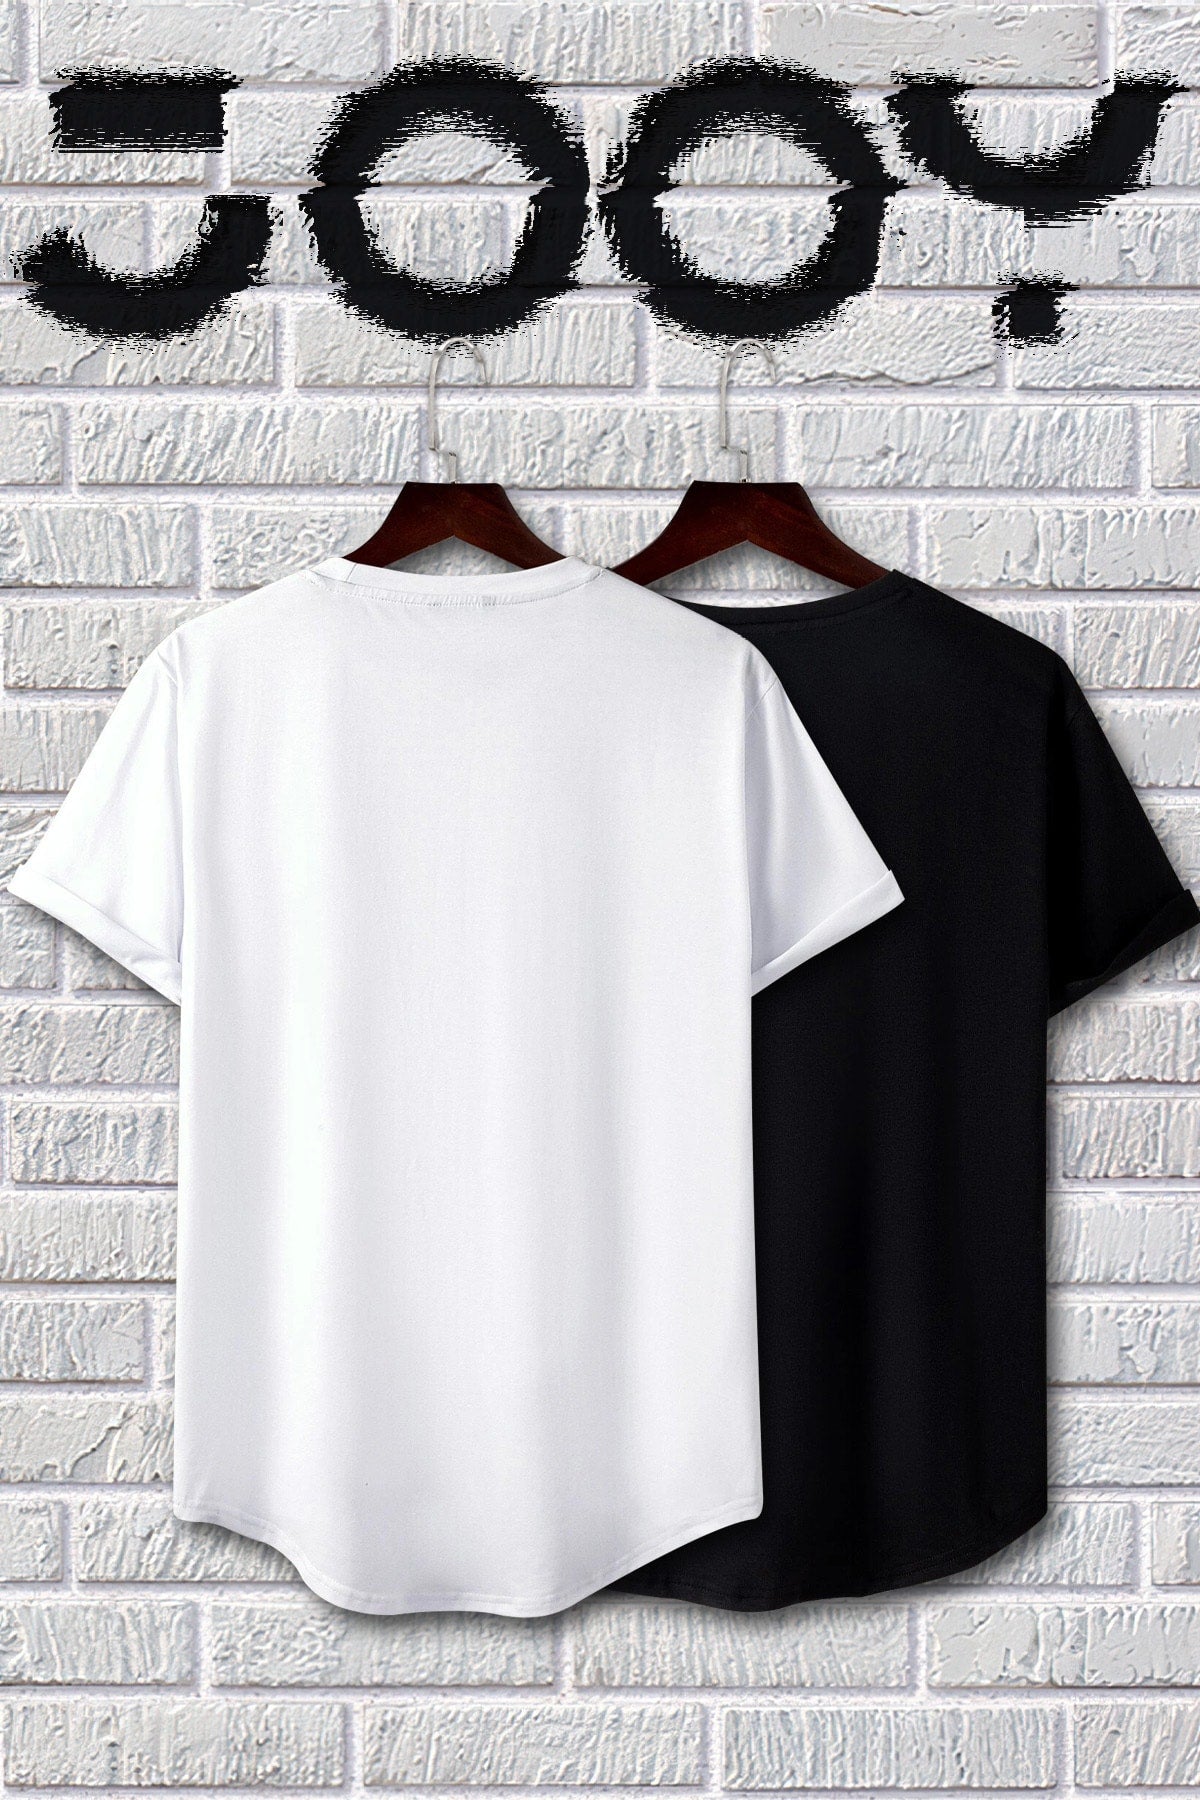 Brooklyn Printed Black and White Oval Cut Tshirt Set of 2